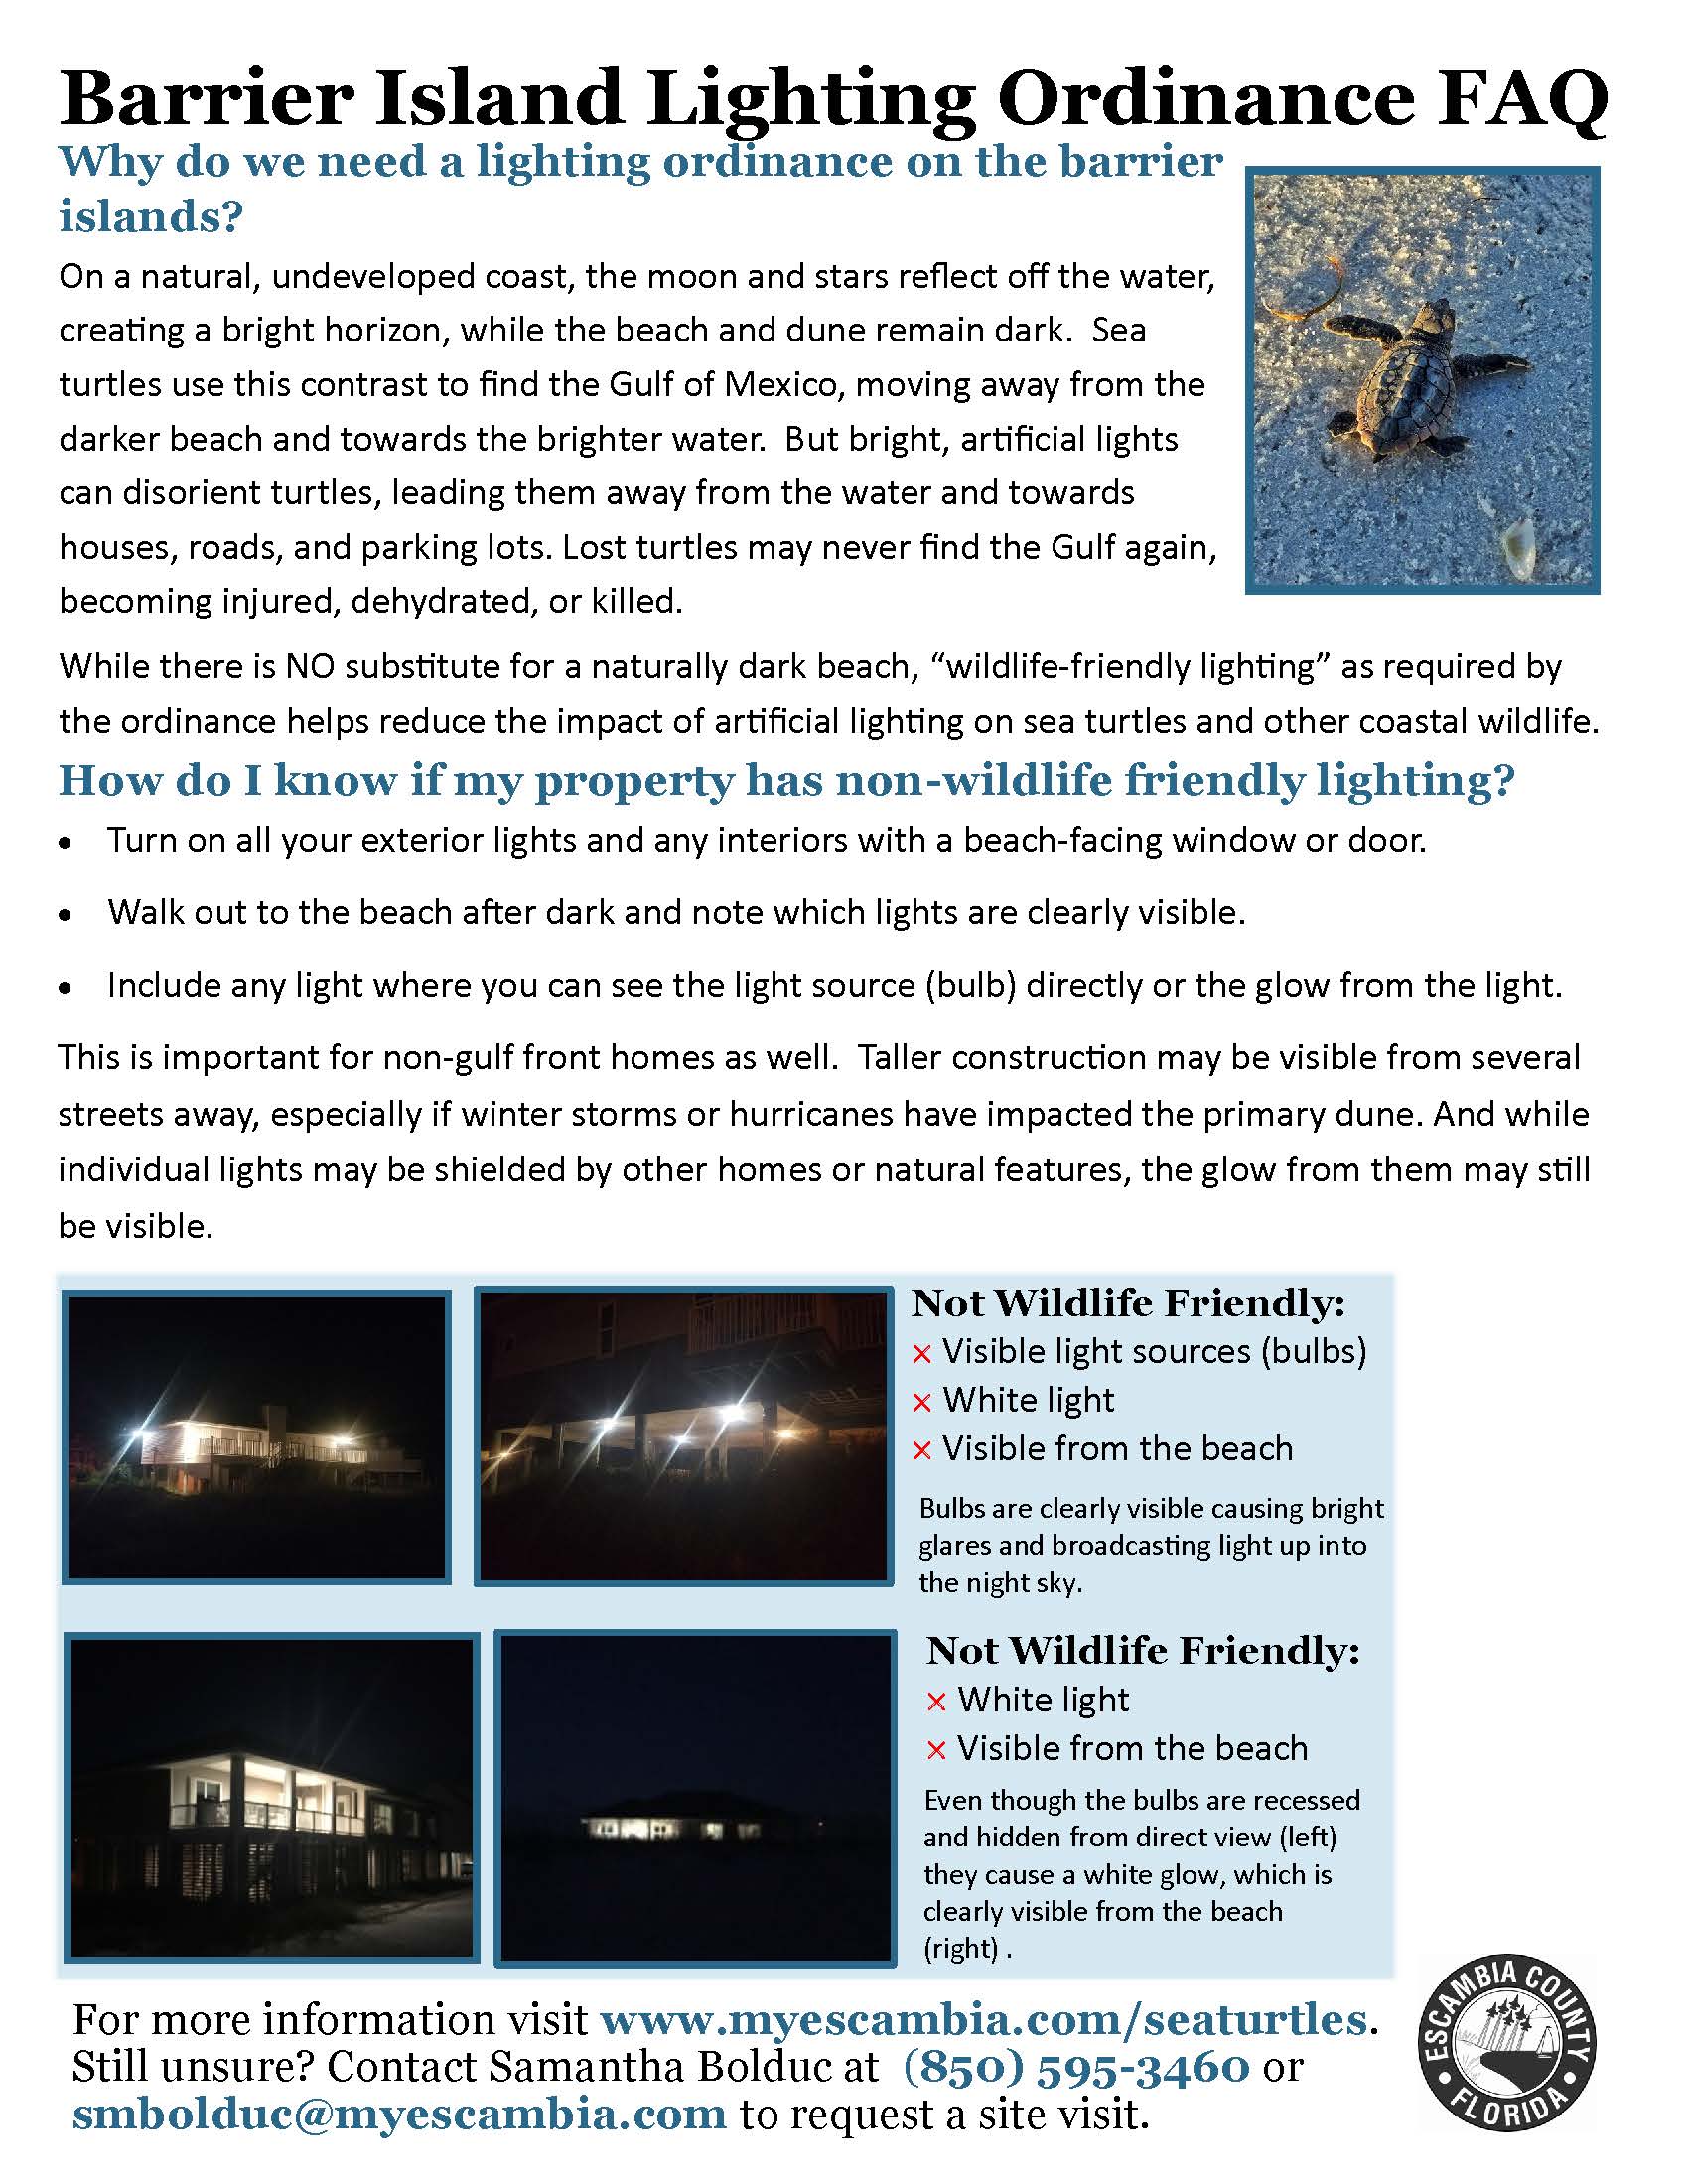 Image of the Barrier Island Lighting Ordinance FAQ